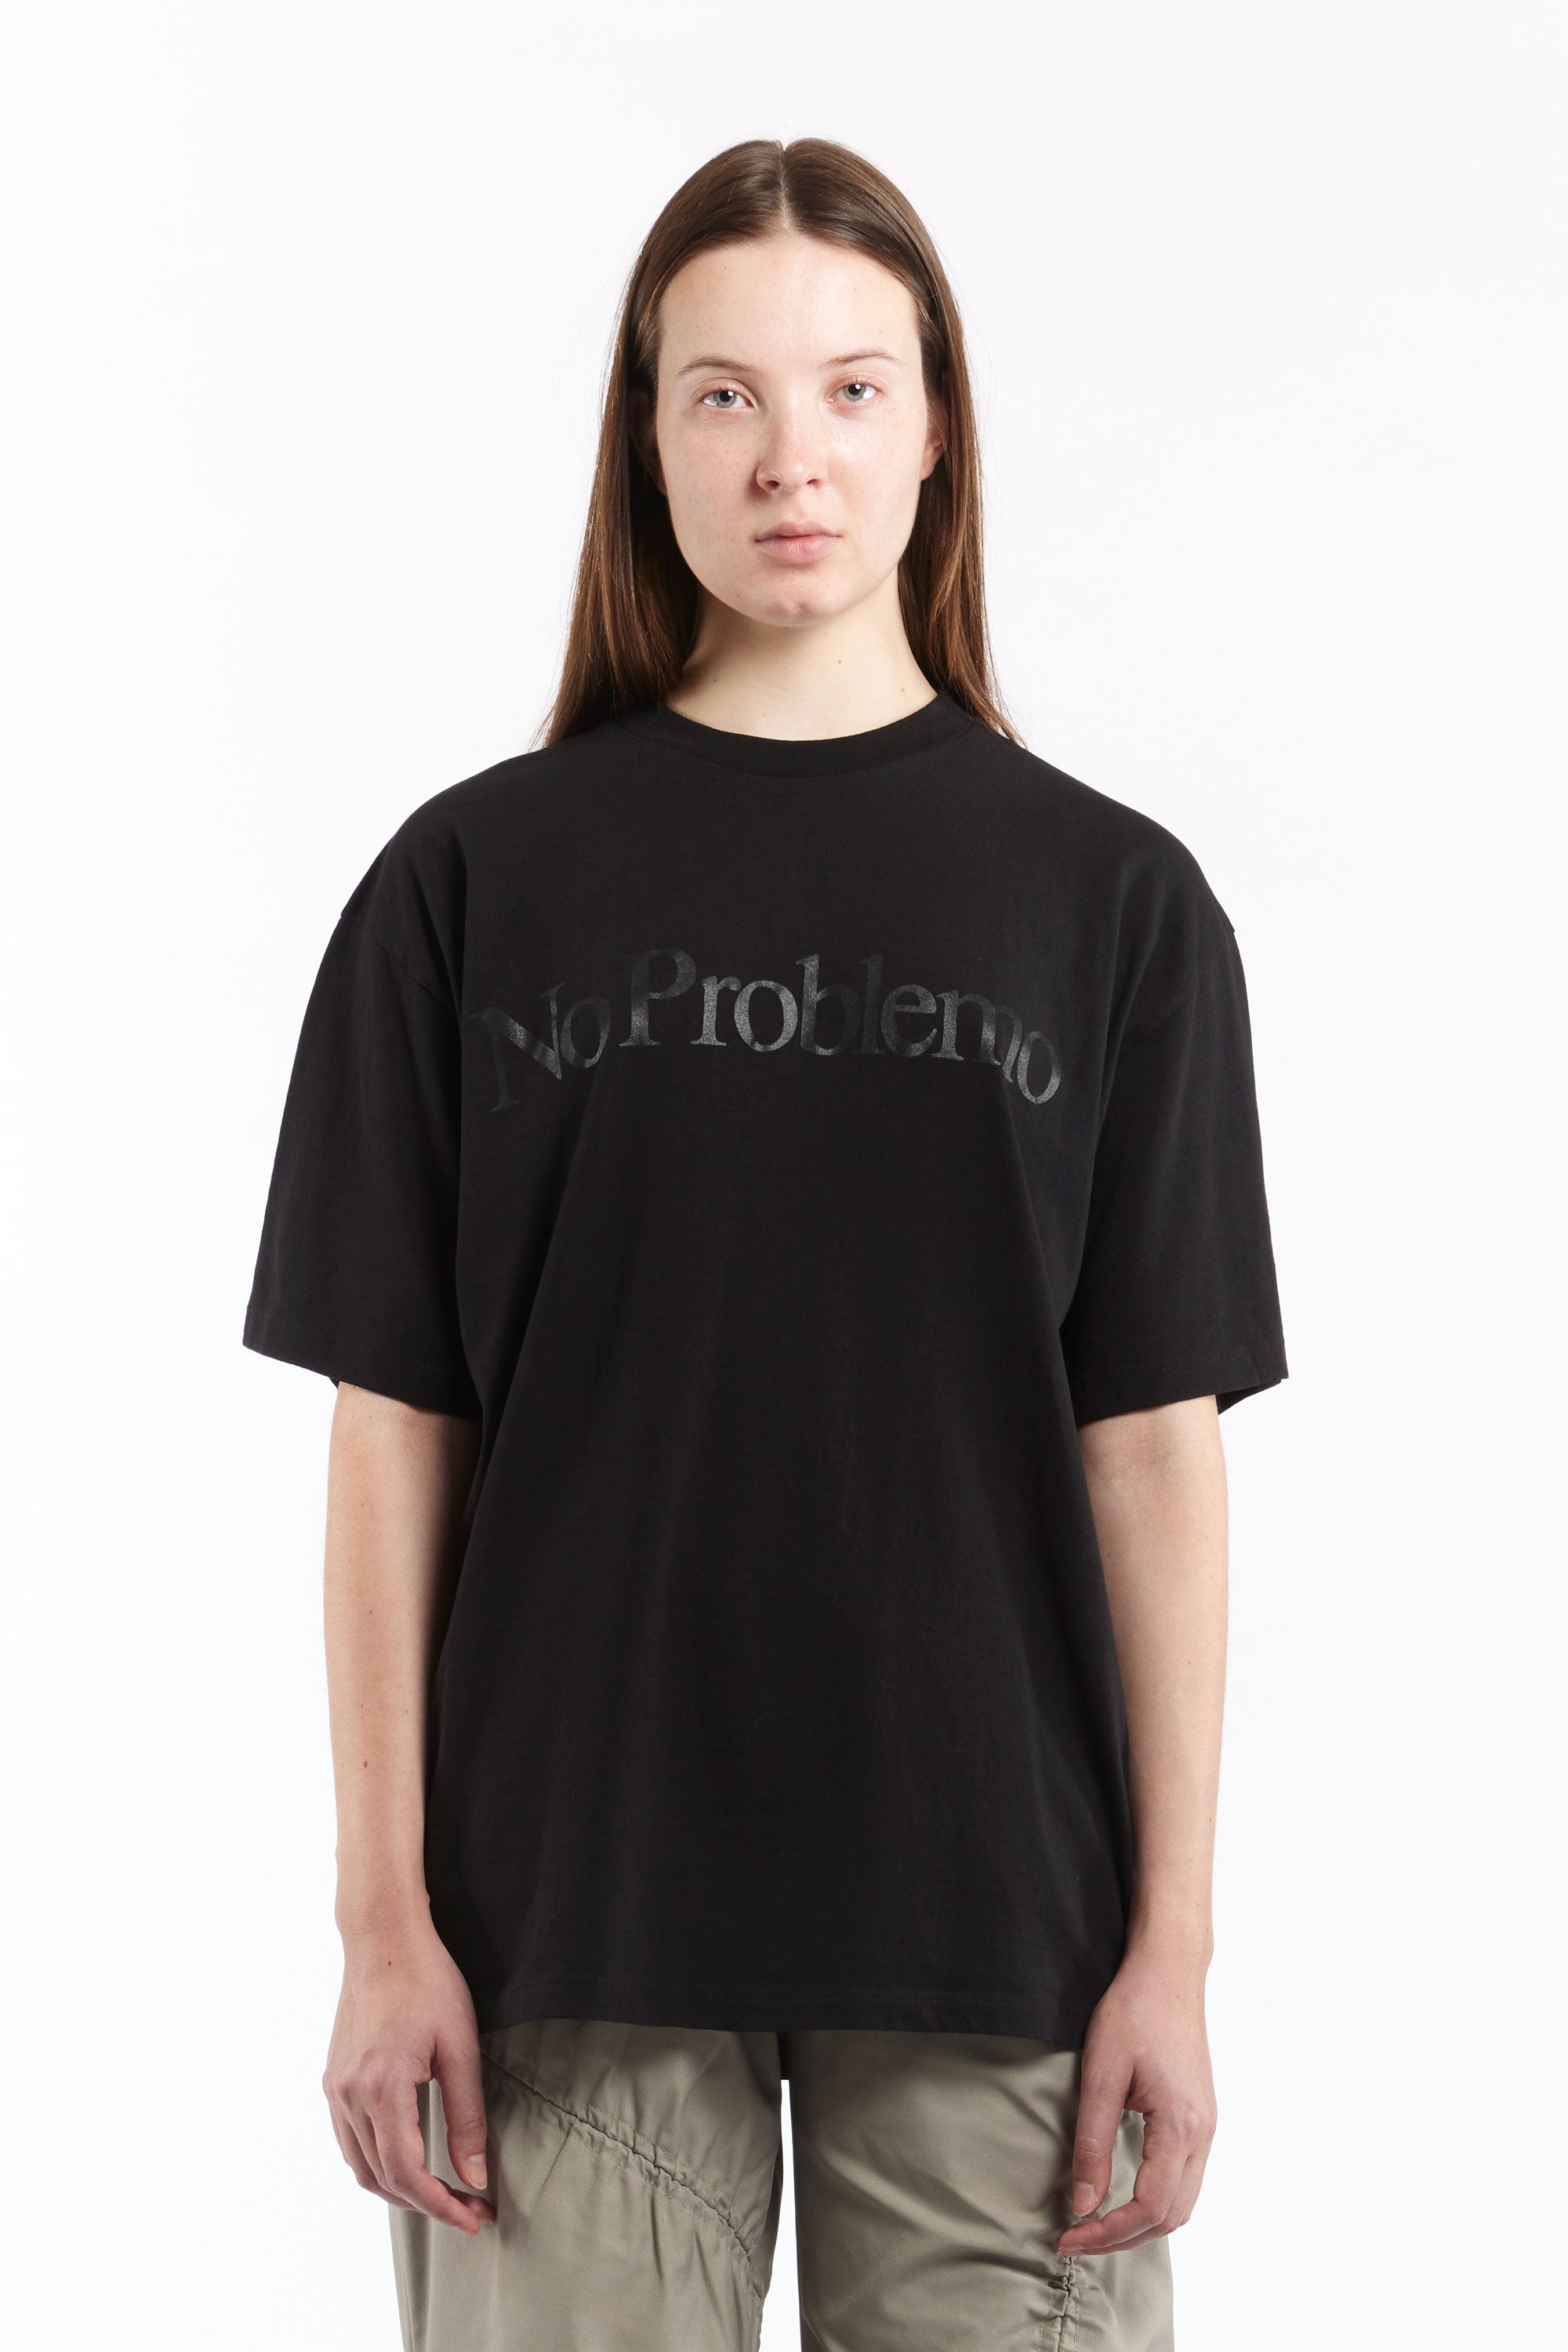 Olga To a Tee Front-Closure Black T-Shirt and similar items